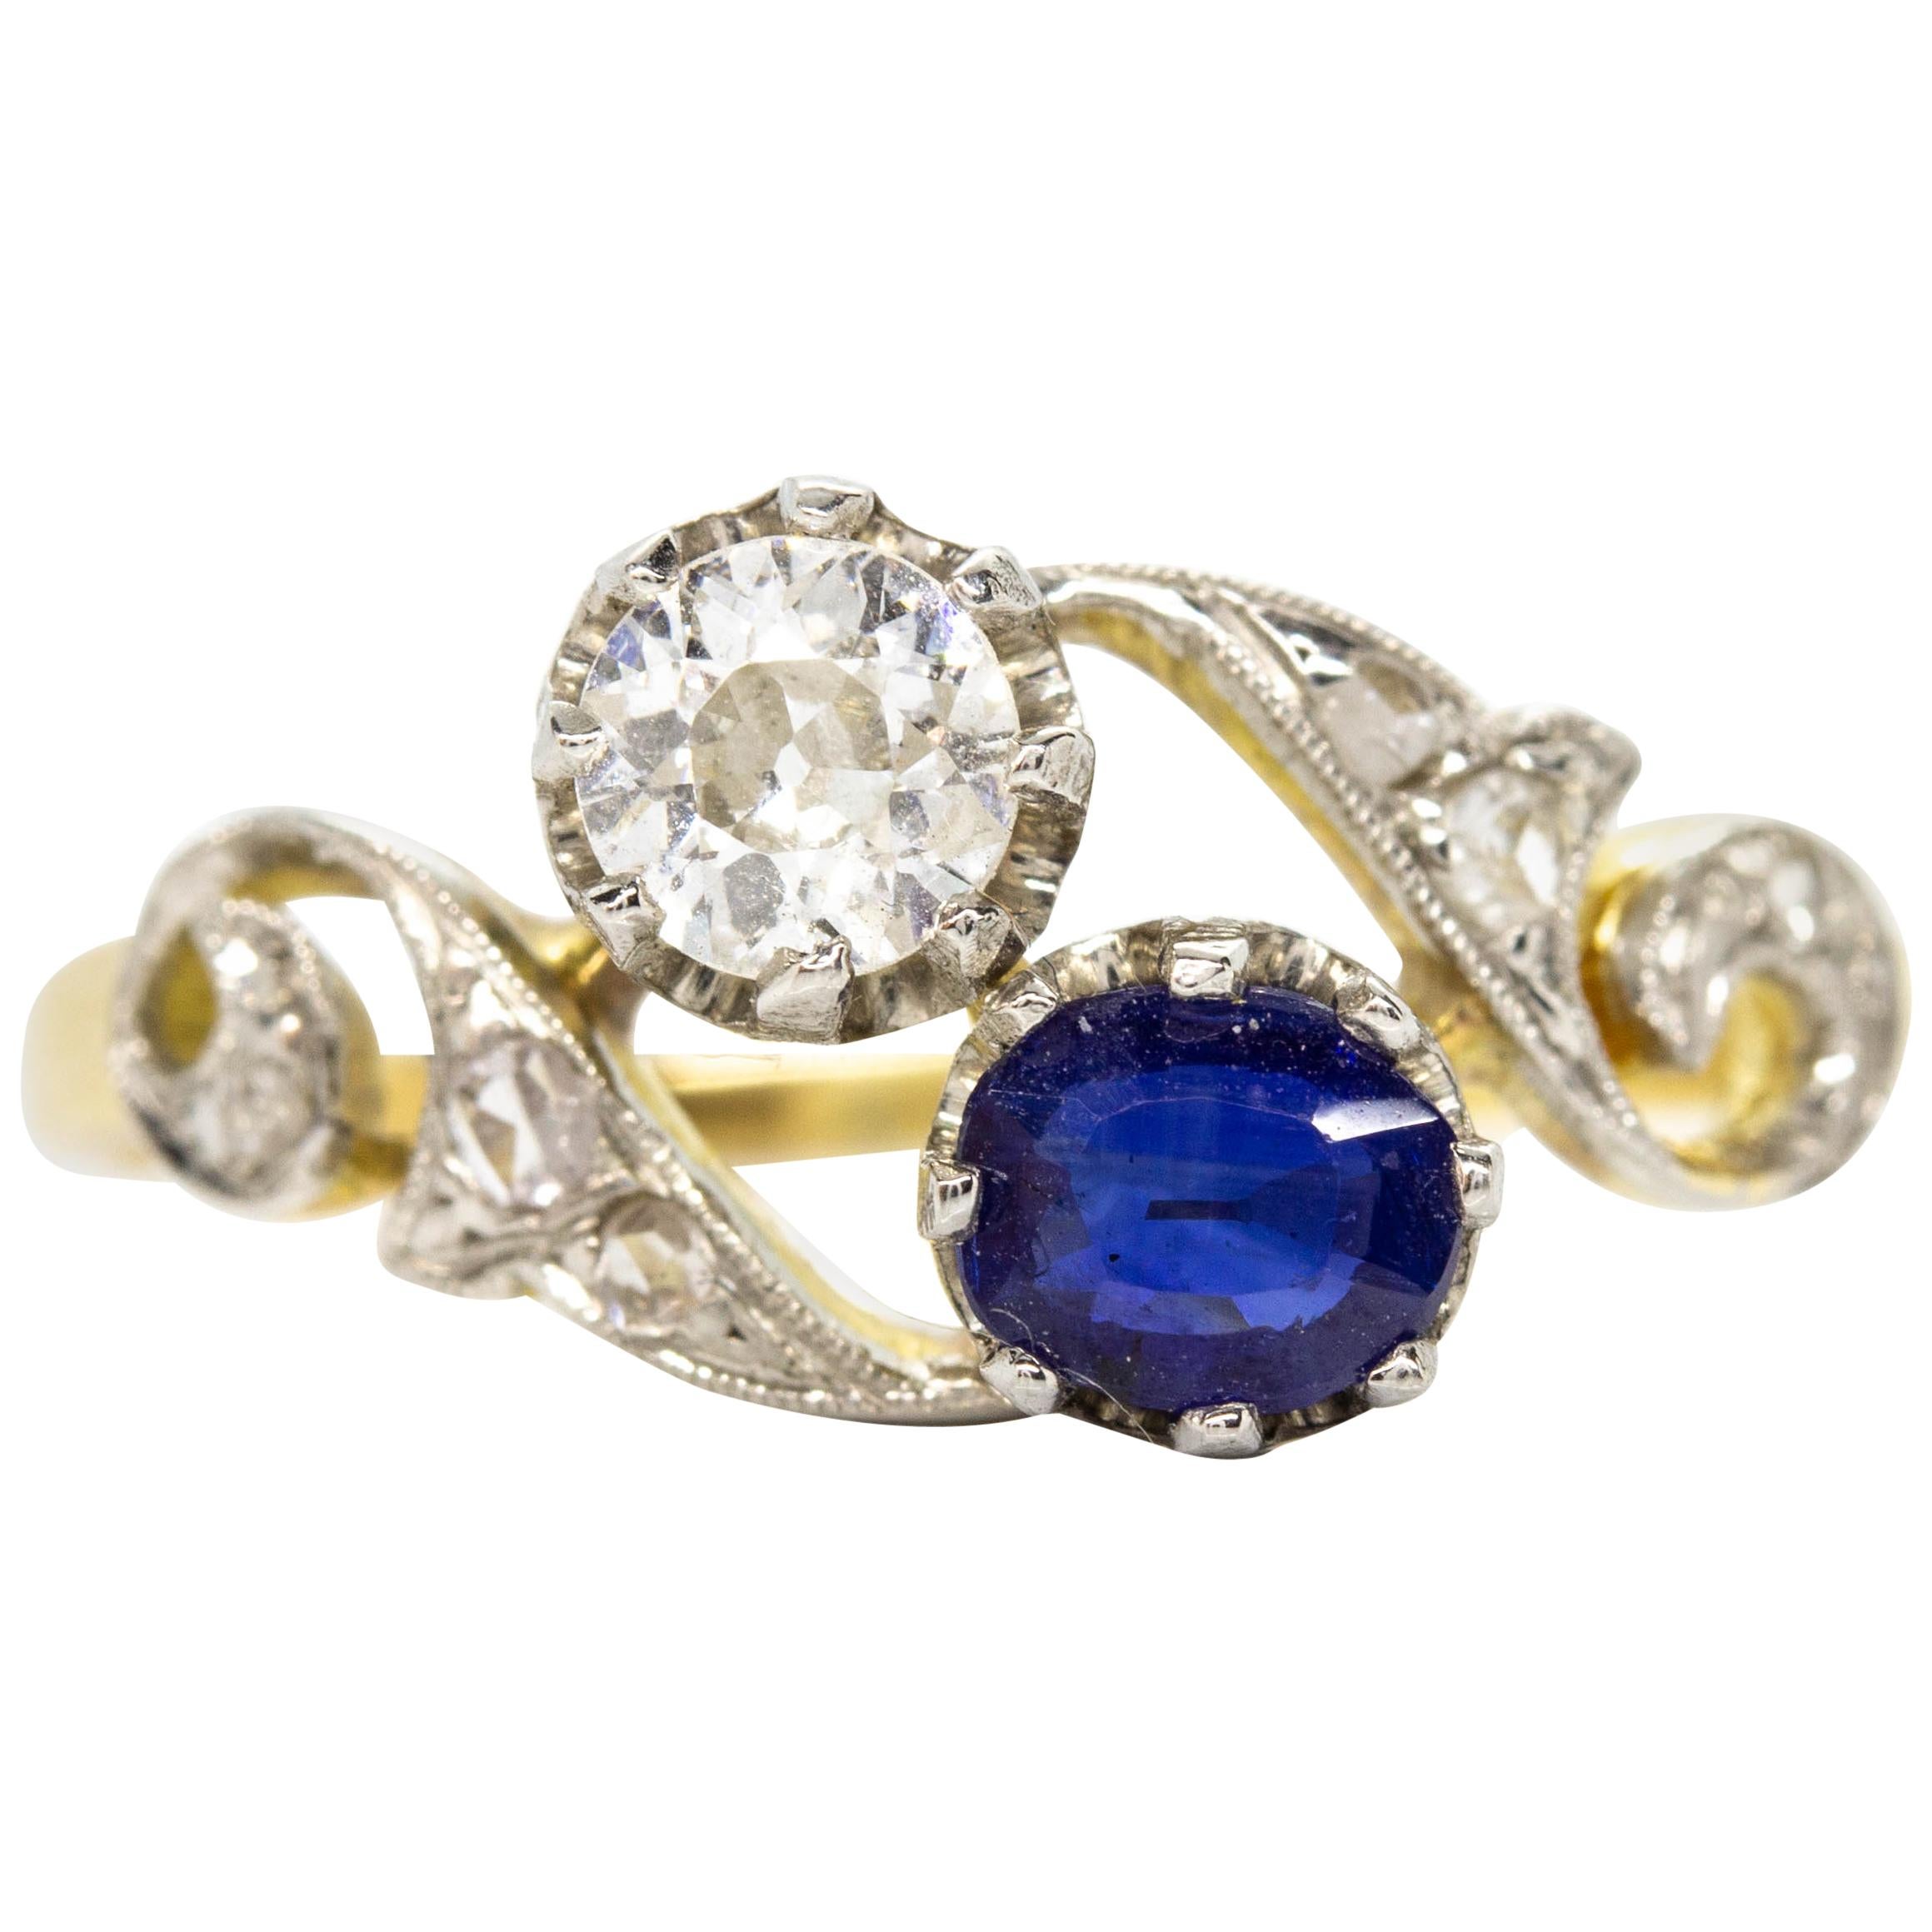 Original Art Nouveau 18 Karat Gold and Platinum Diamonds Ring